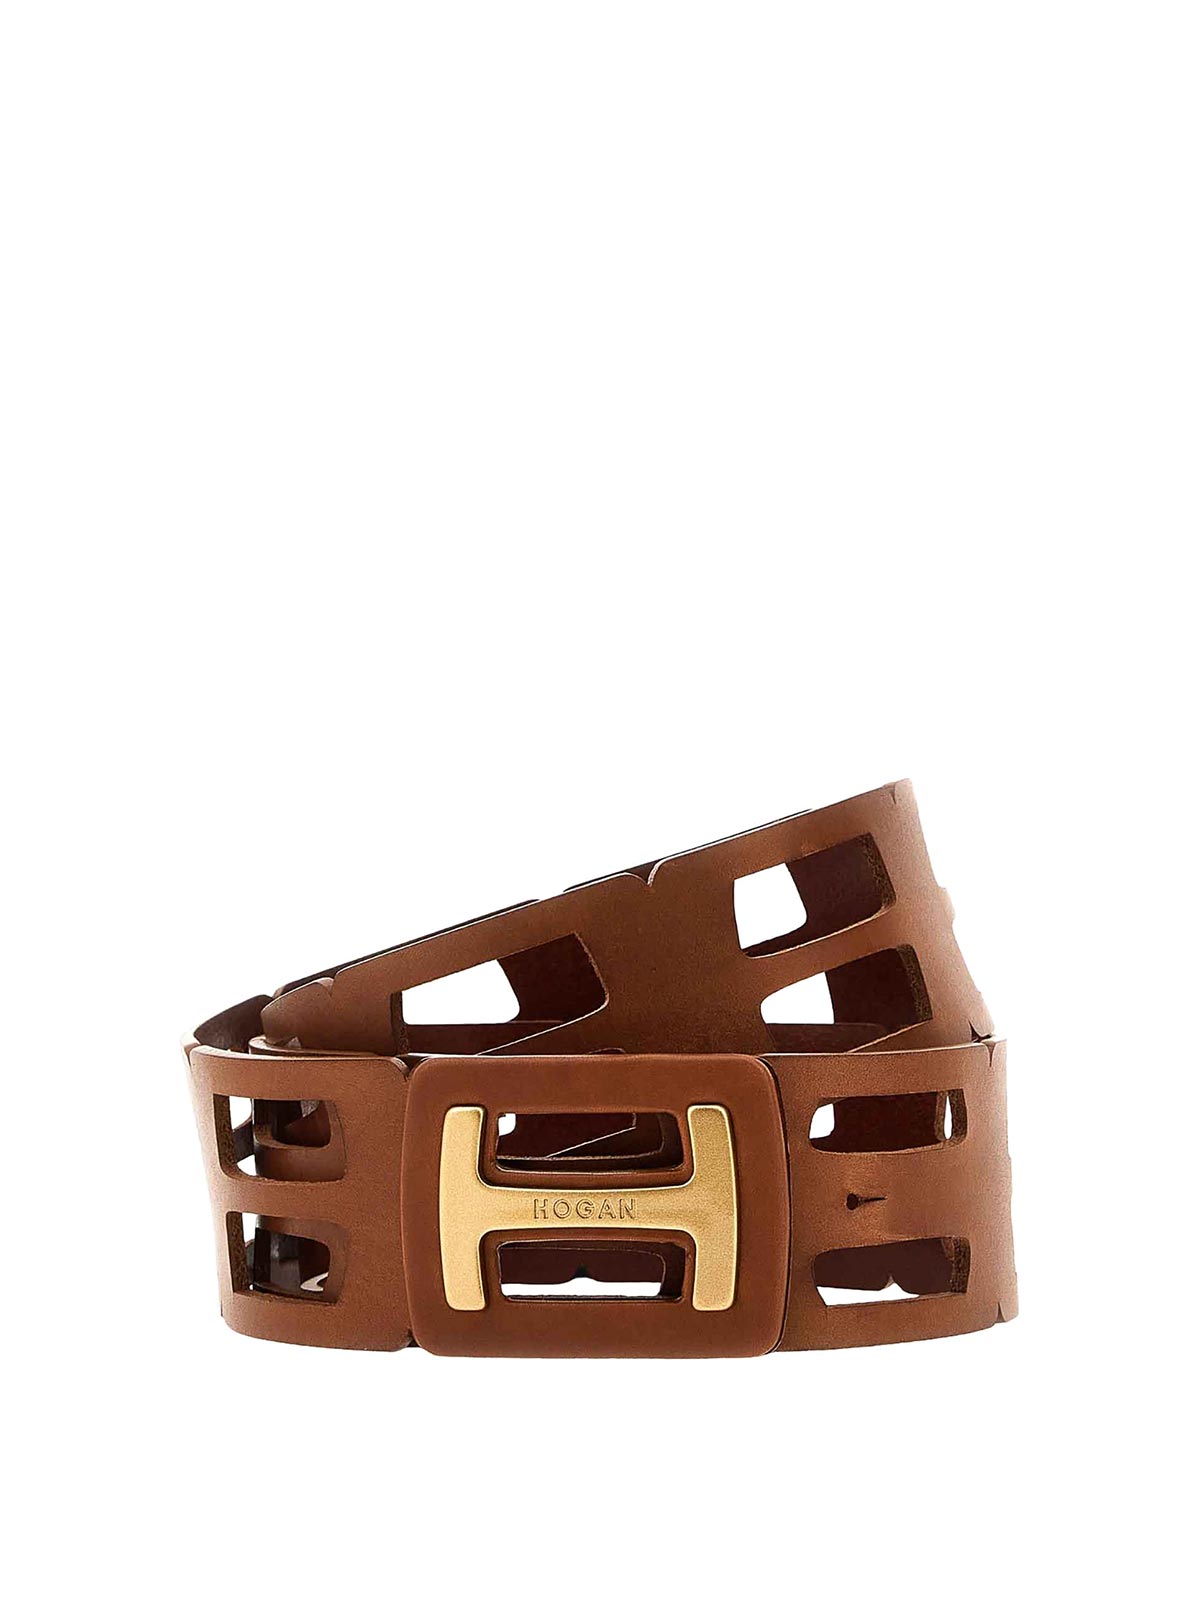 Hogan Leather Belt In Brown